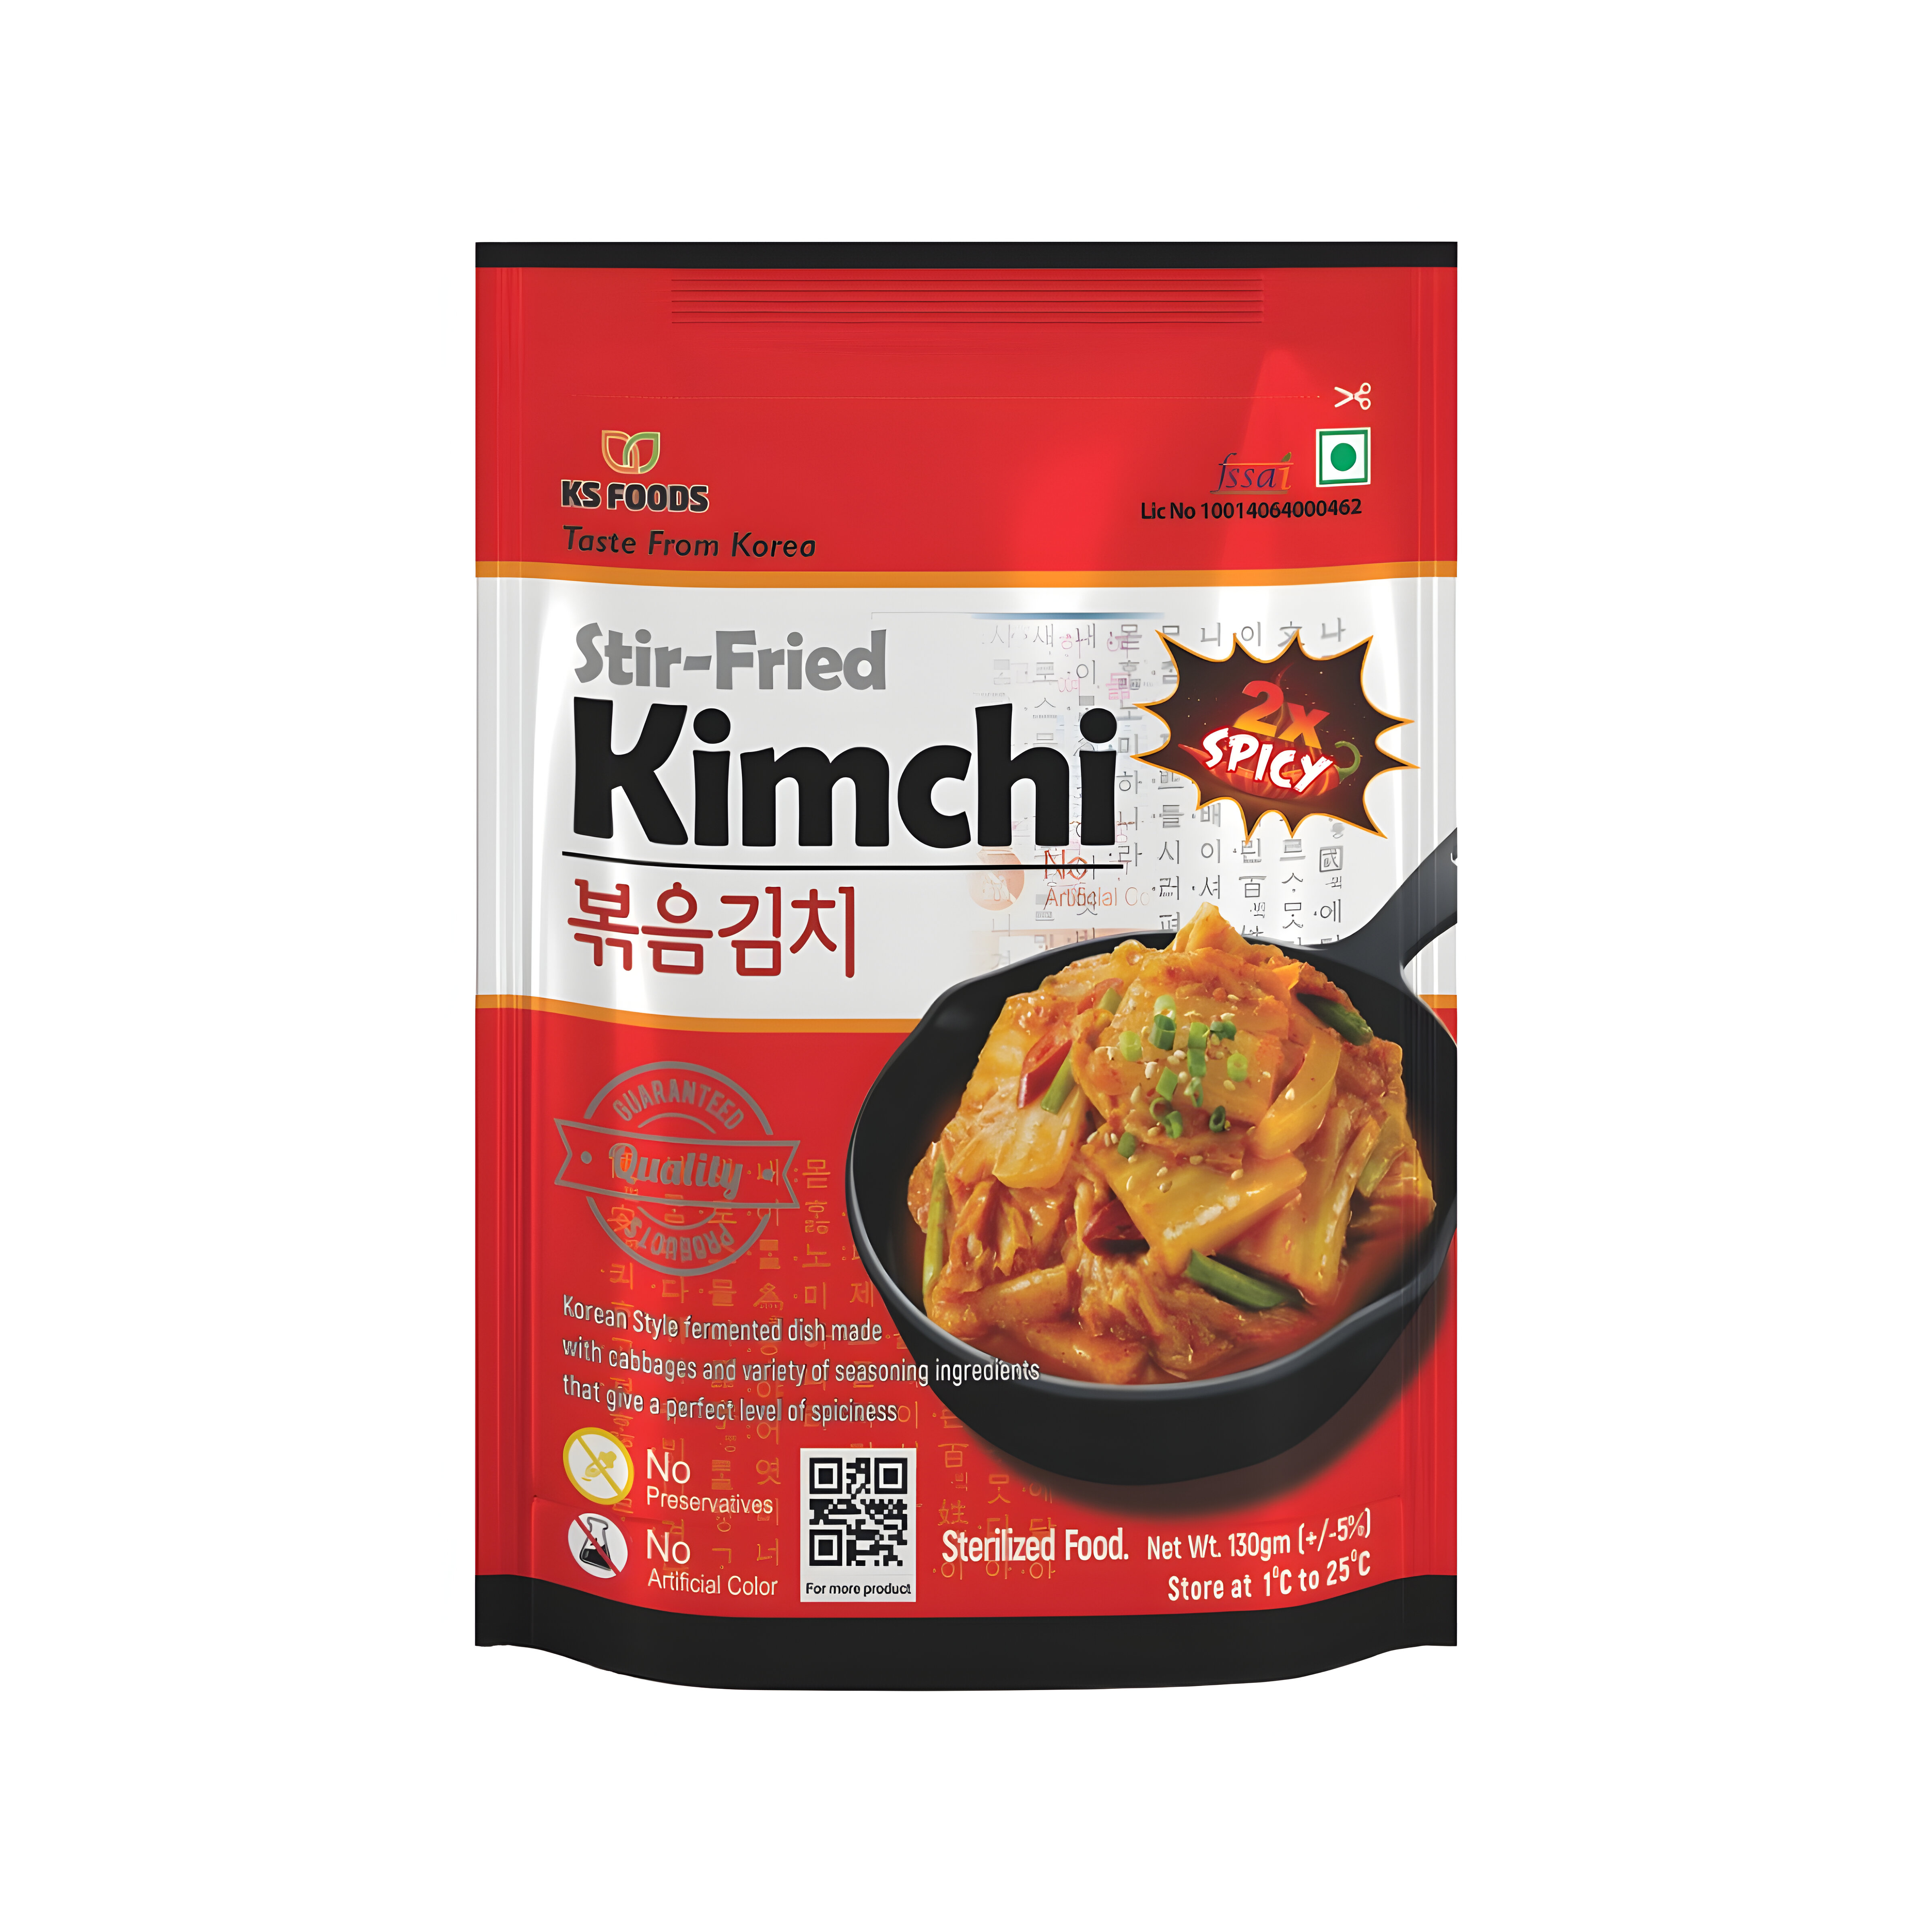 1694231839_1663677778_kimchi-2x-spicy-1